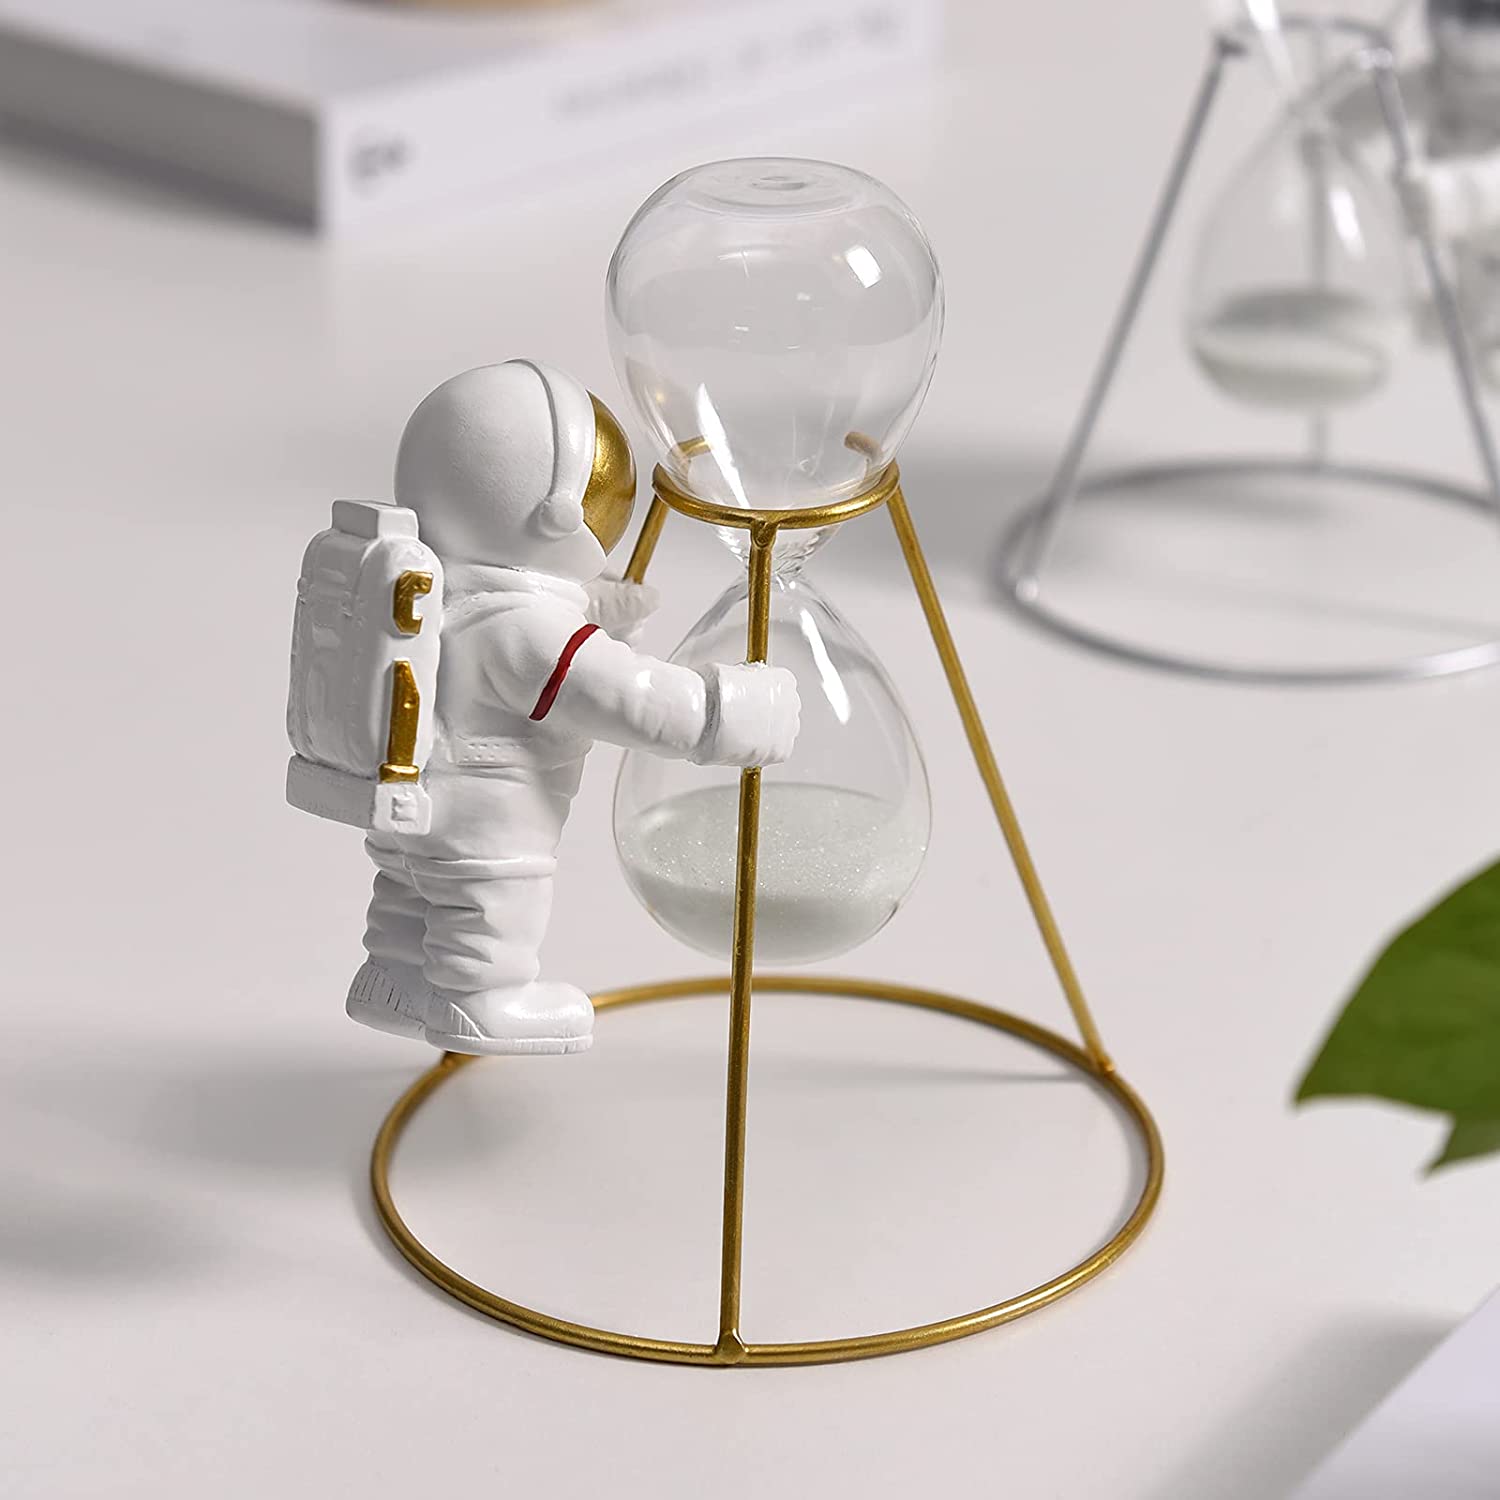 Decorative Astronaut Hourglass5